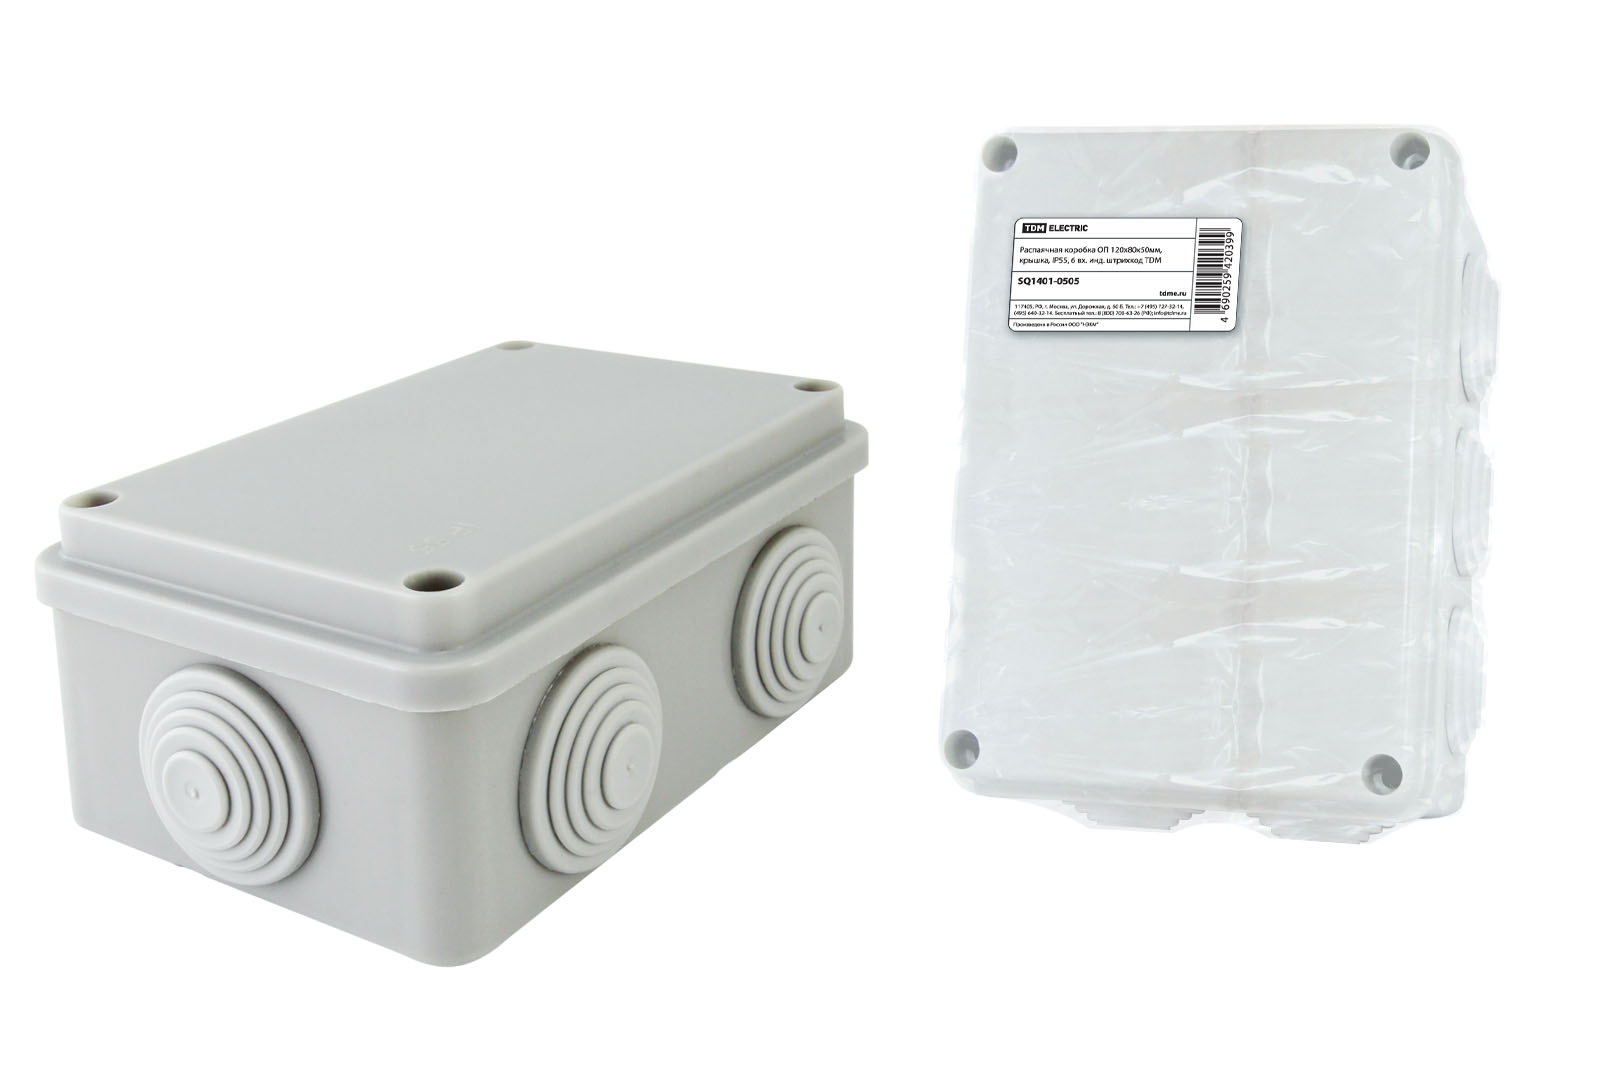 Распаячная коробка ОП 120х80х50мм, крышка, IP55, 6 вх. инд. штрихкод TDM SQ1401-0505 распаячная коробка для гипсокартона bylectrica